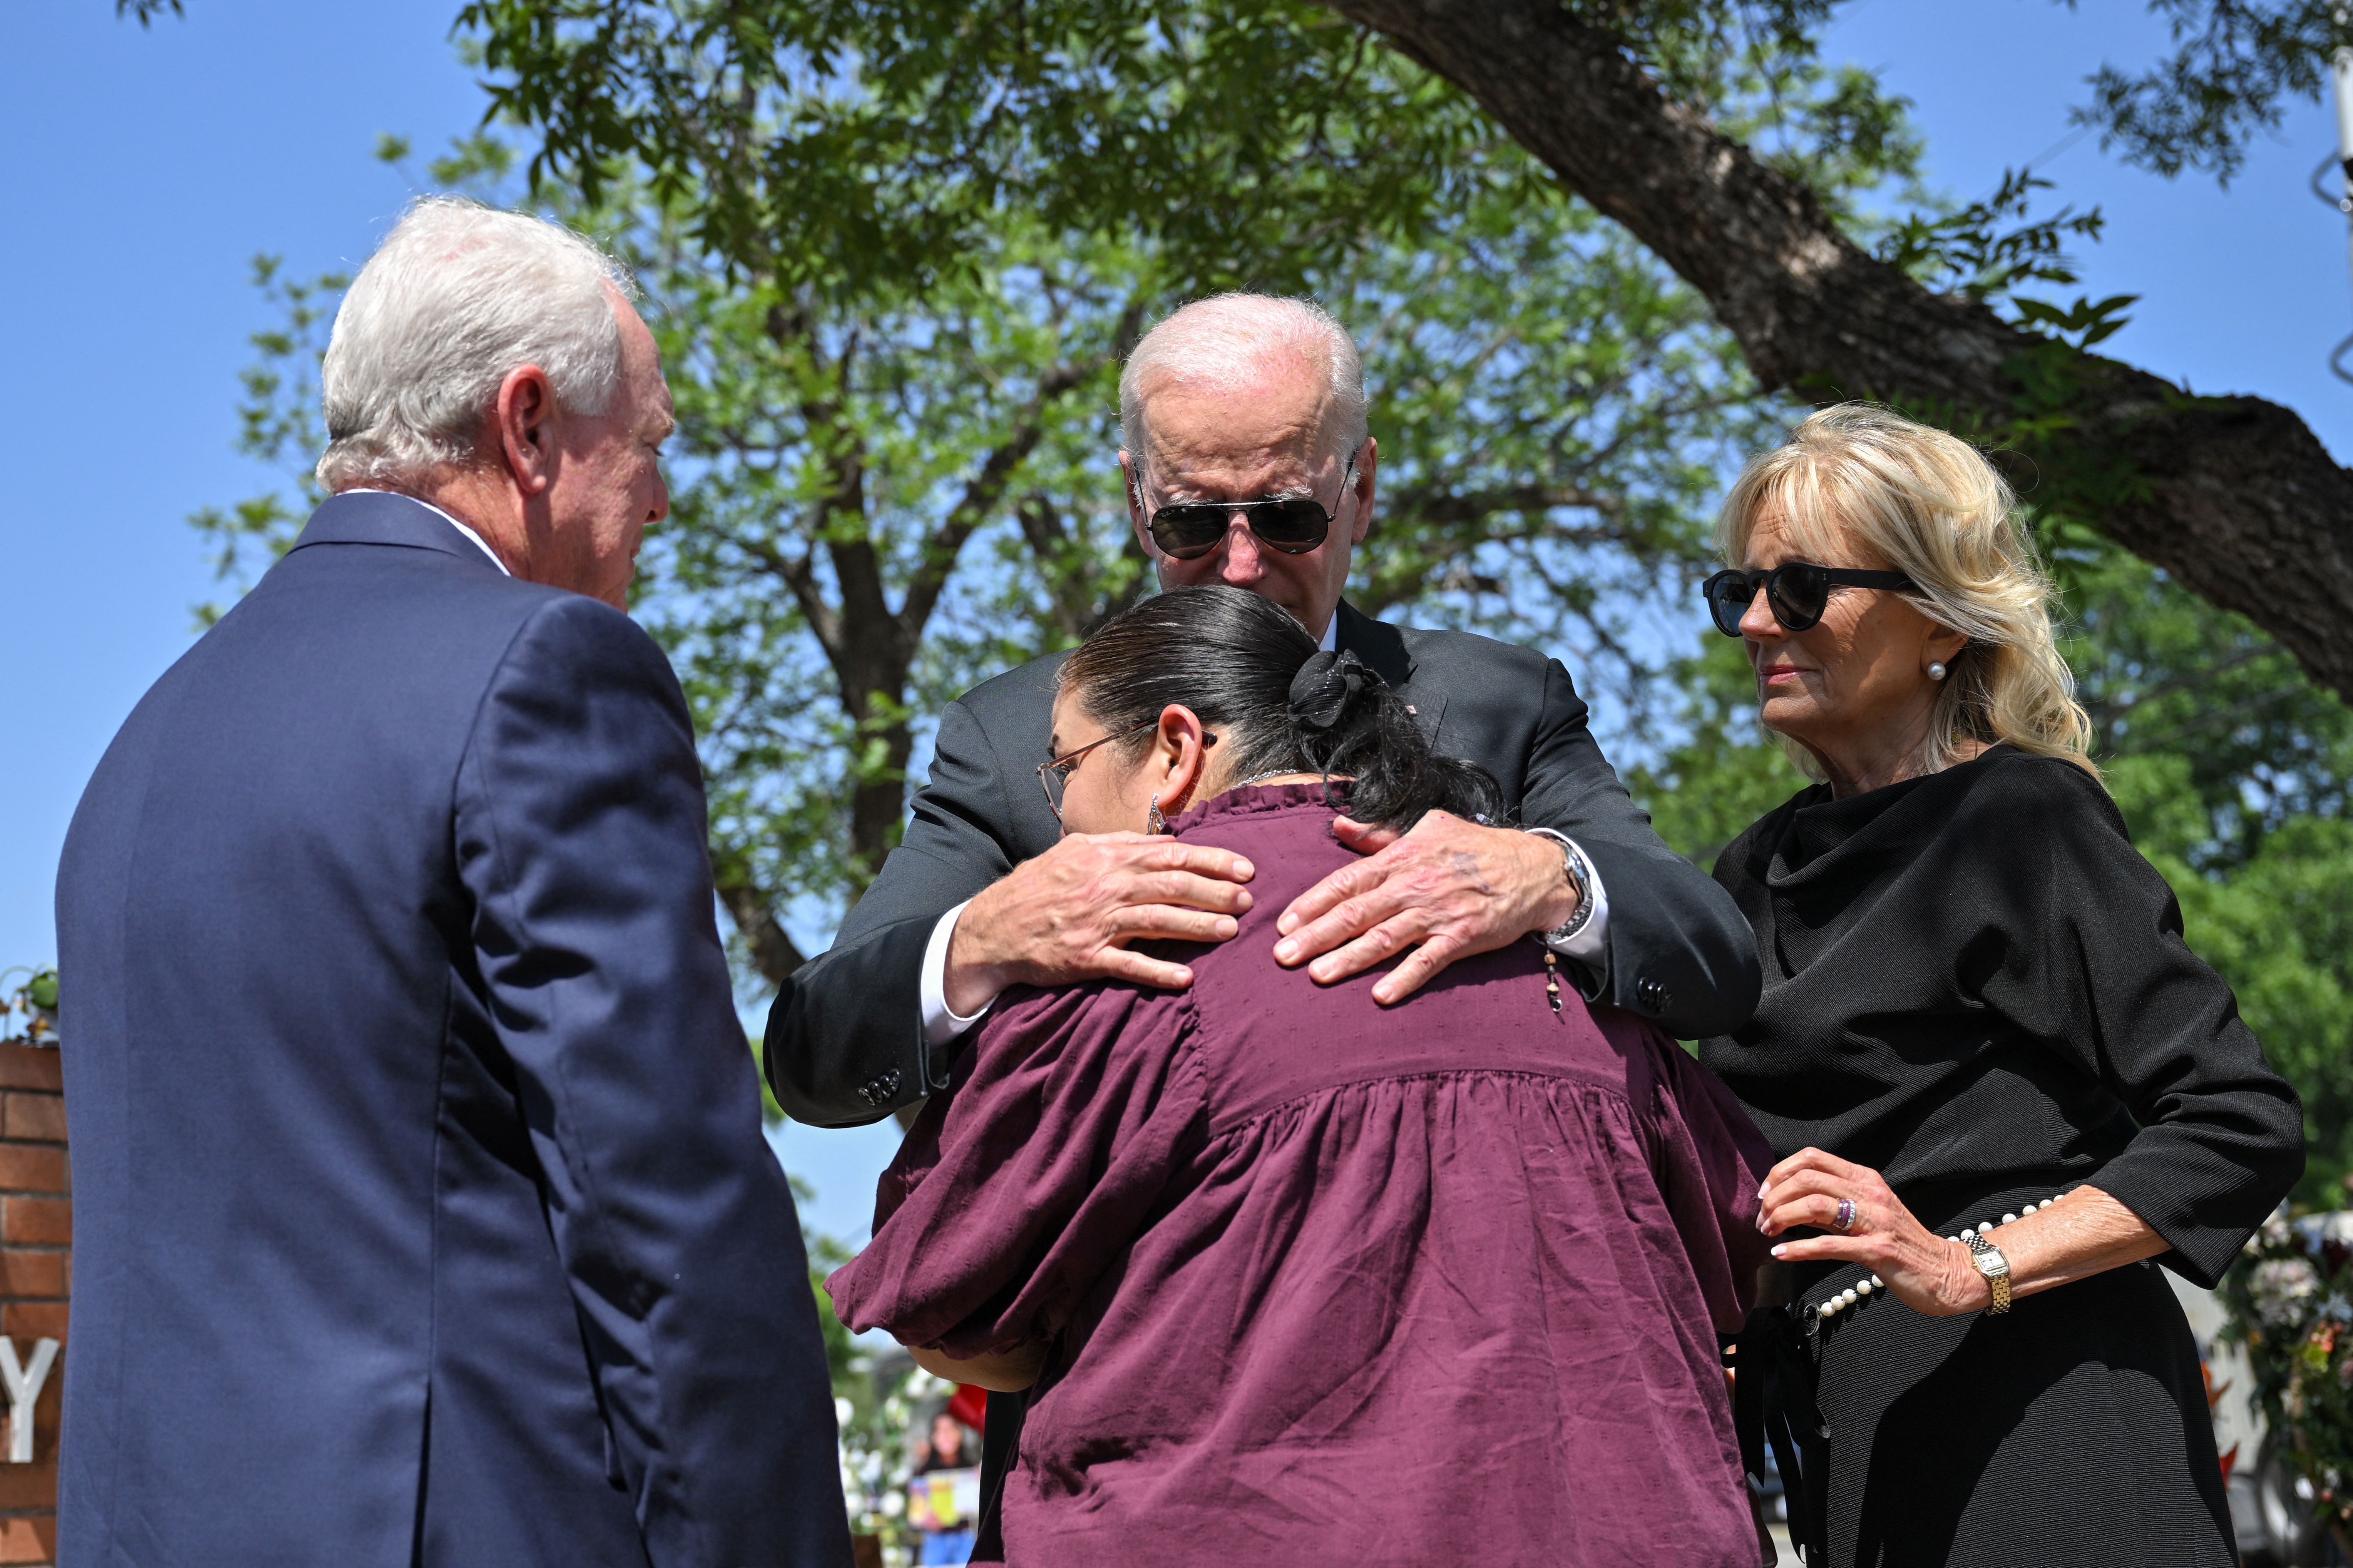 Joe Biden embraces Mandy Gutierrez, the Priciple of Robb Elementary School